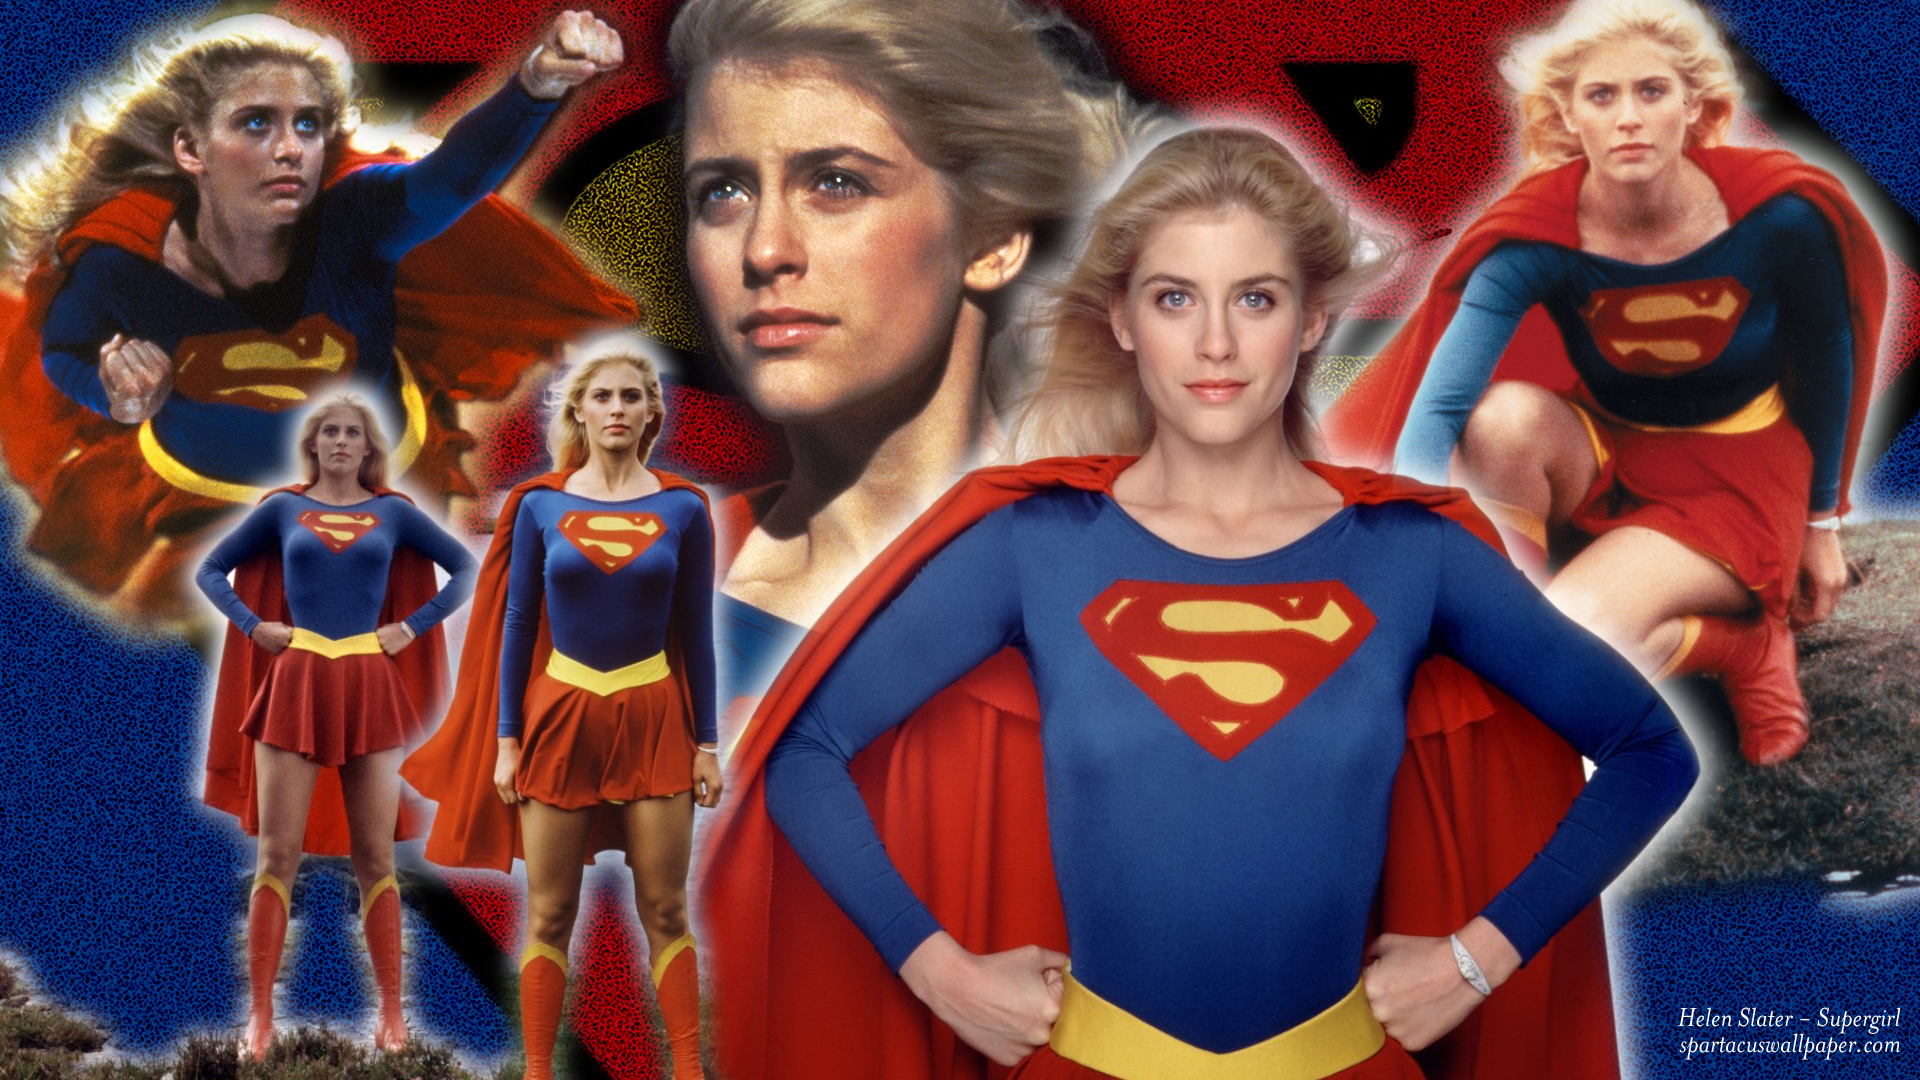 s later wallpaper,superhero,hero,fictional character,superman,justice league